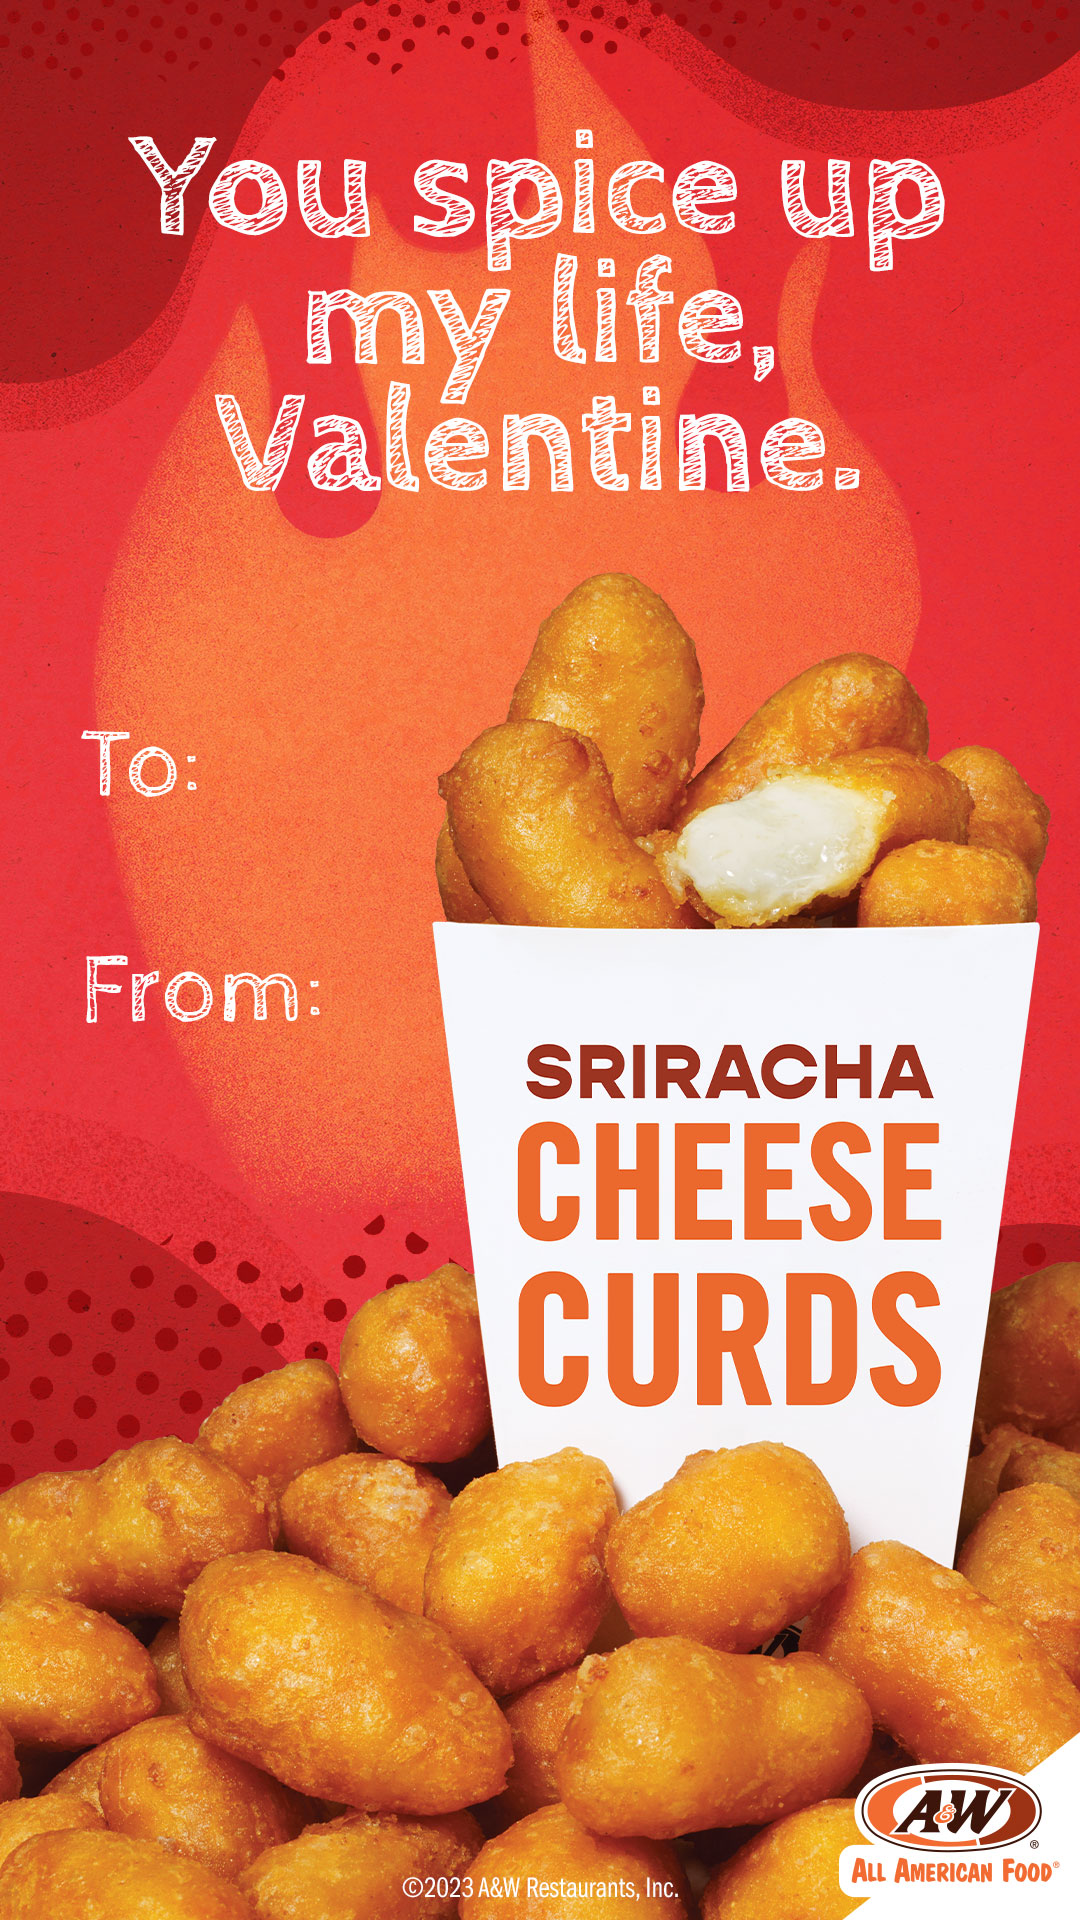 Sriracha Curds Valentine's Day card